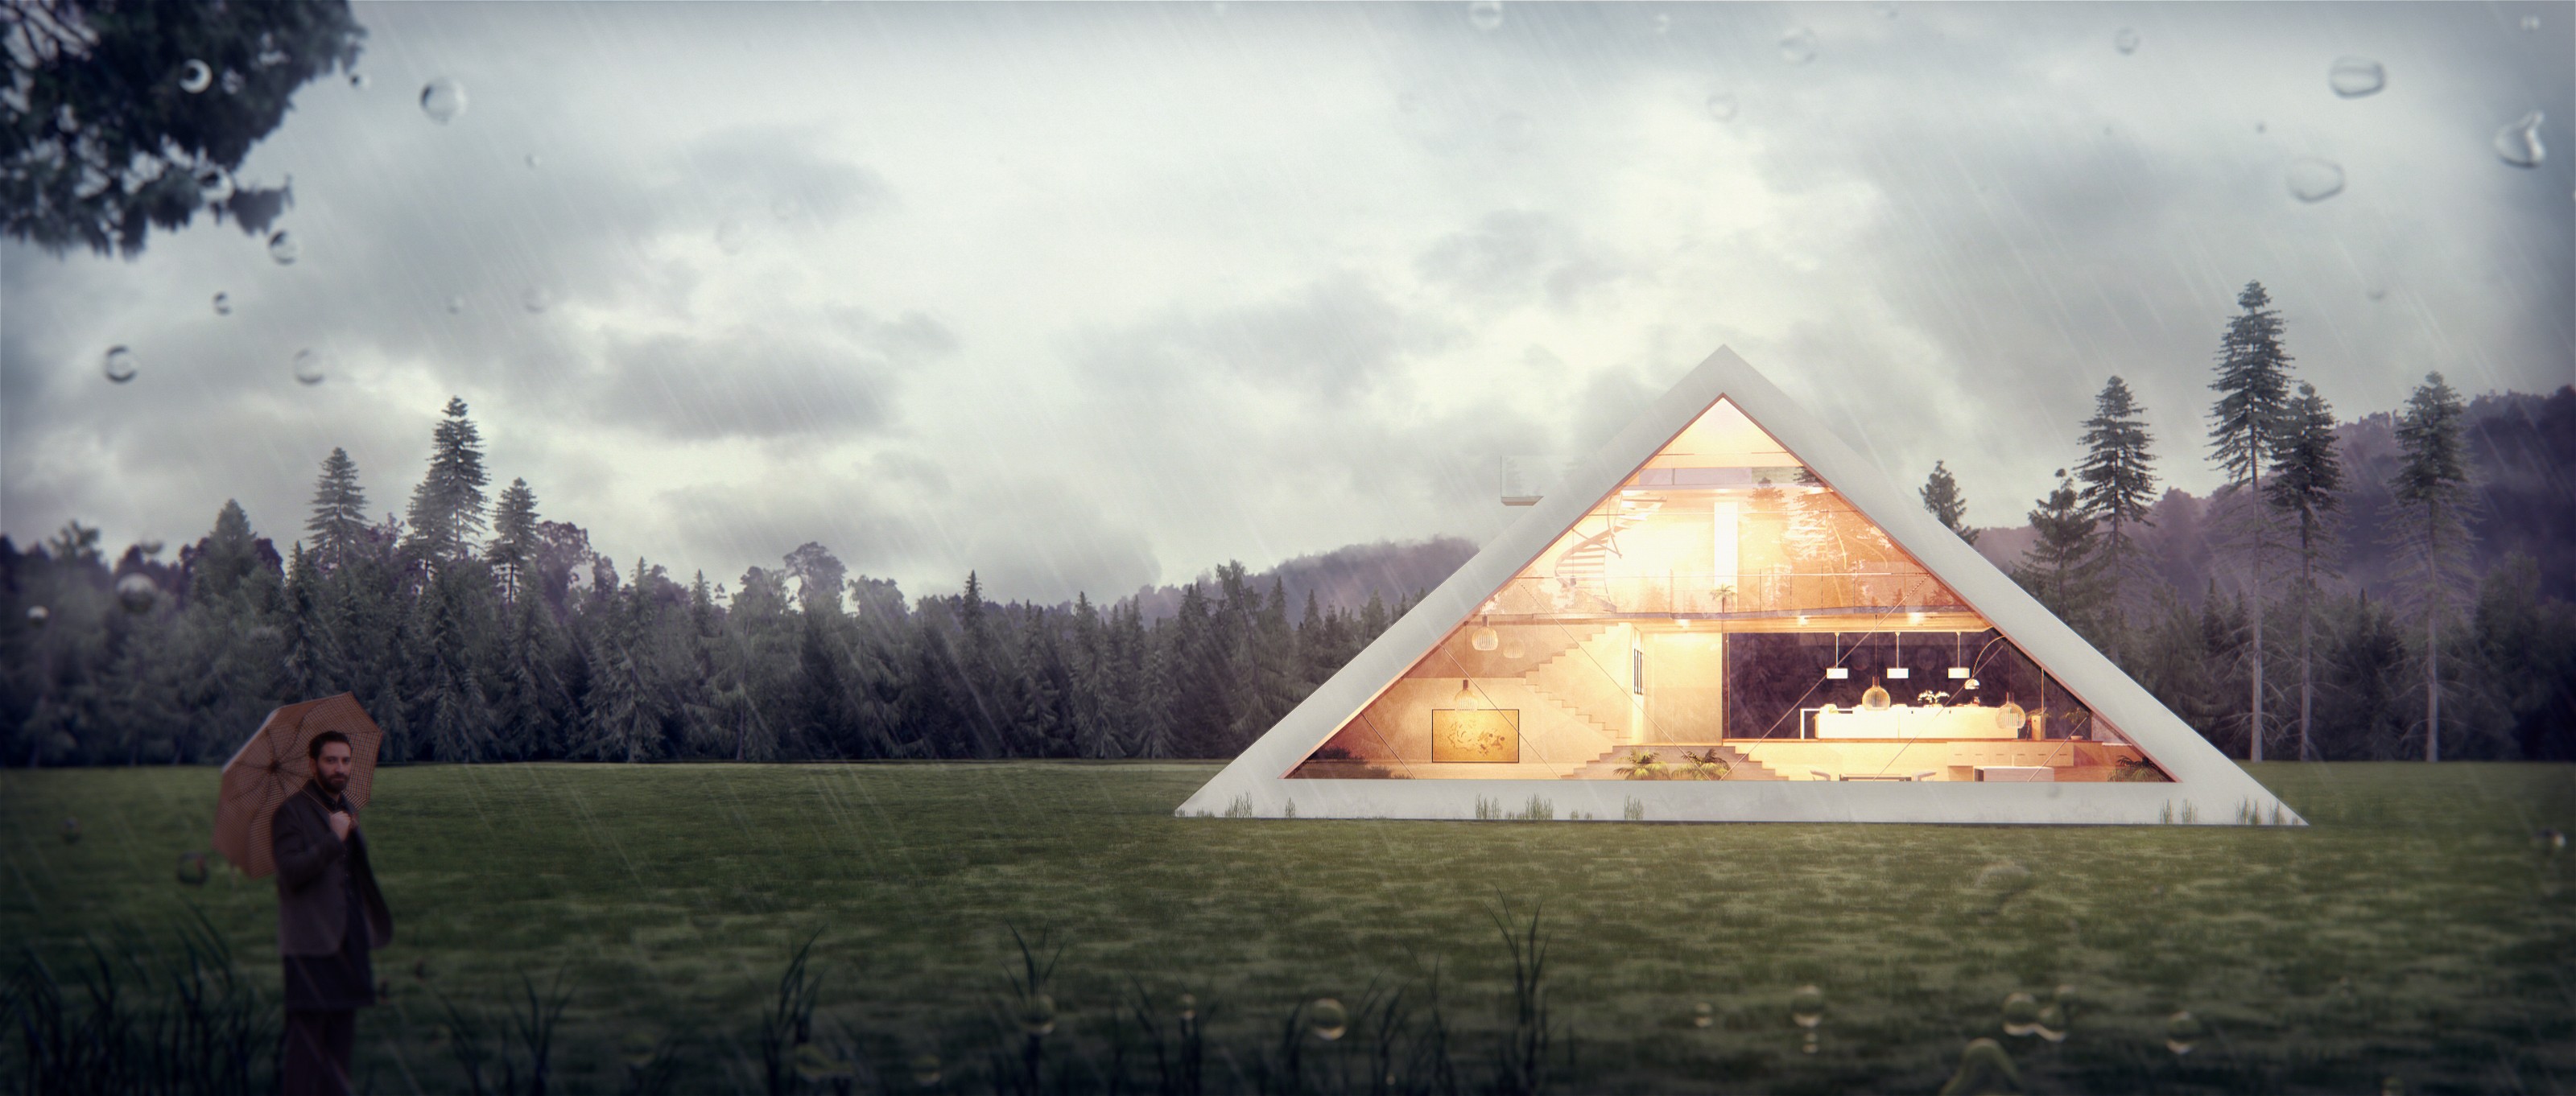 Futuristic pyramid house facade